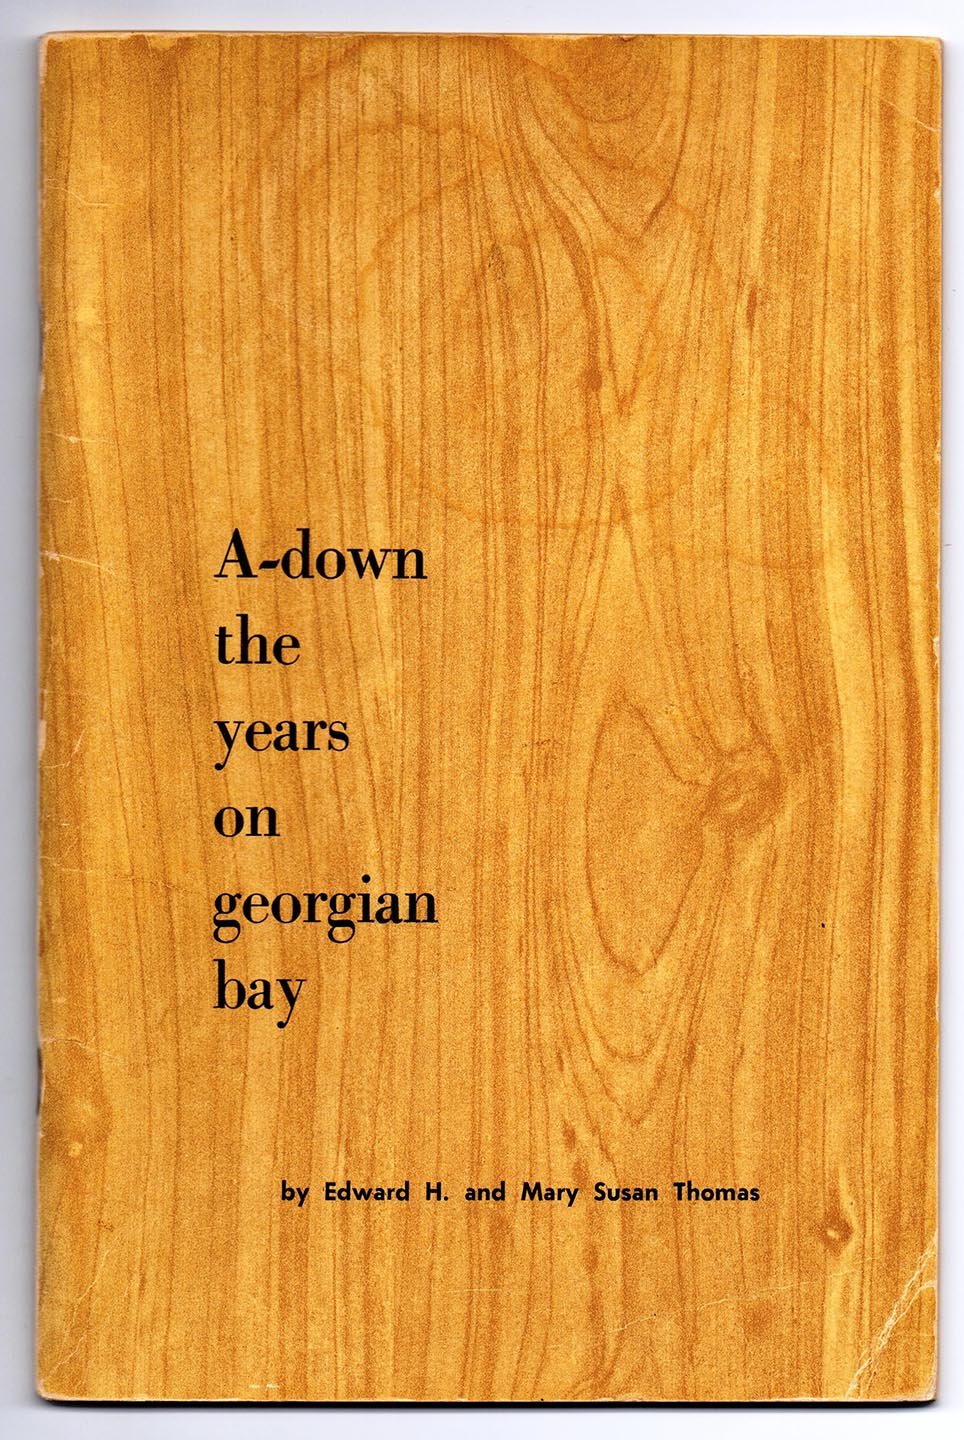 A-down the Years on Georgian Bay